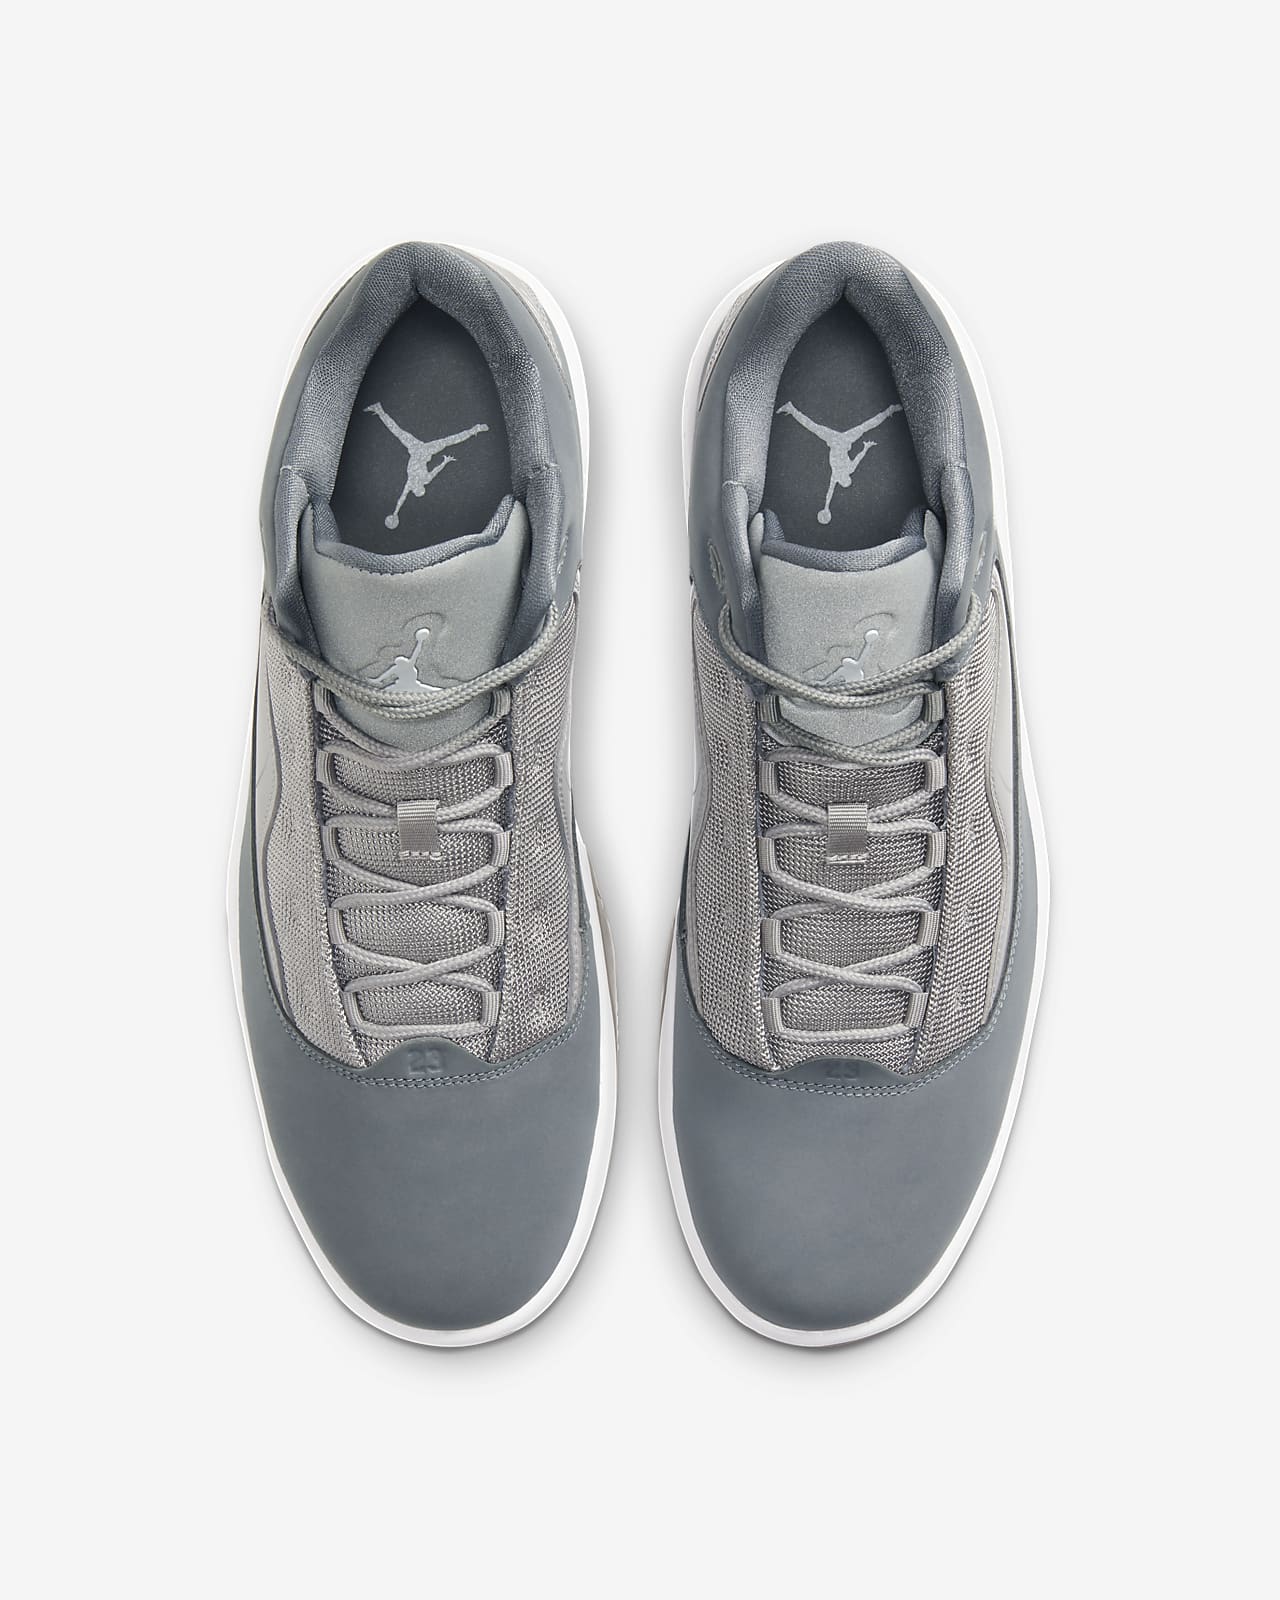 jordan max aura grey men's shoe